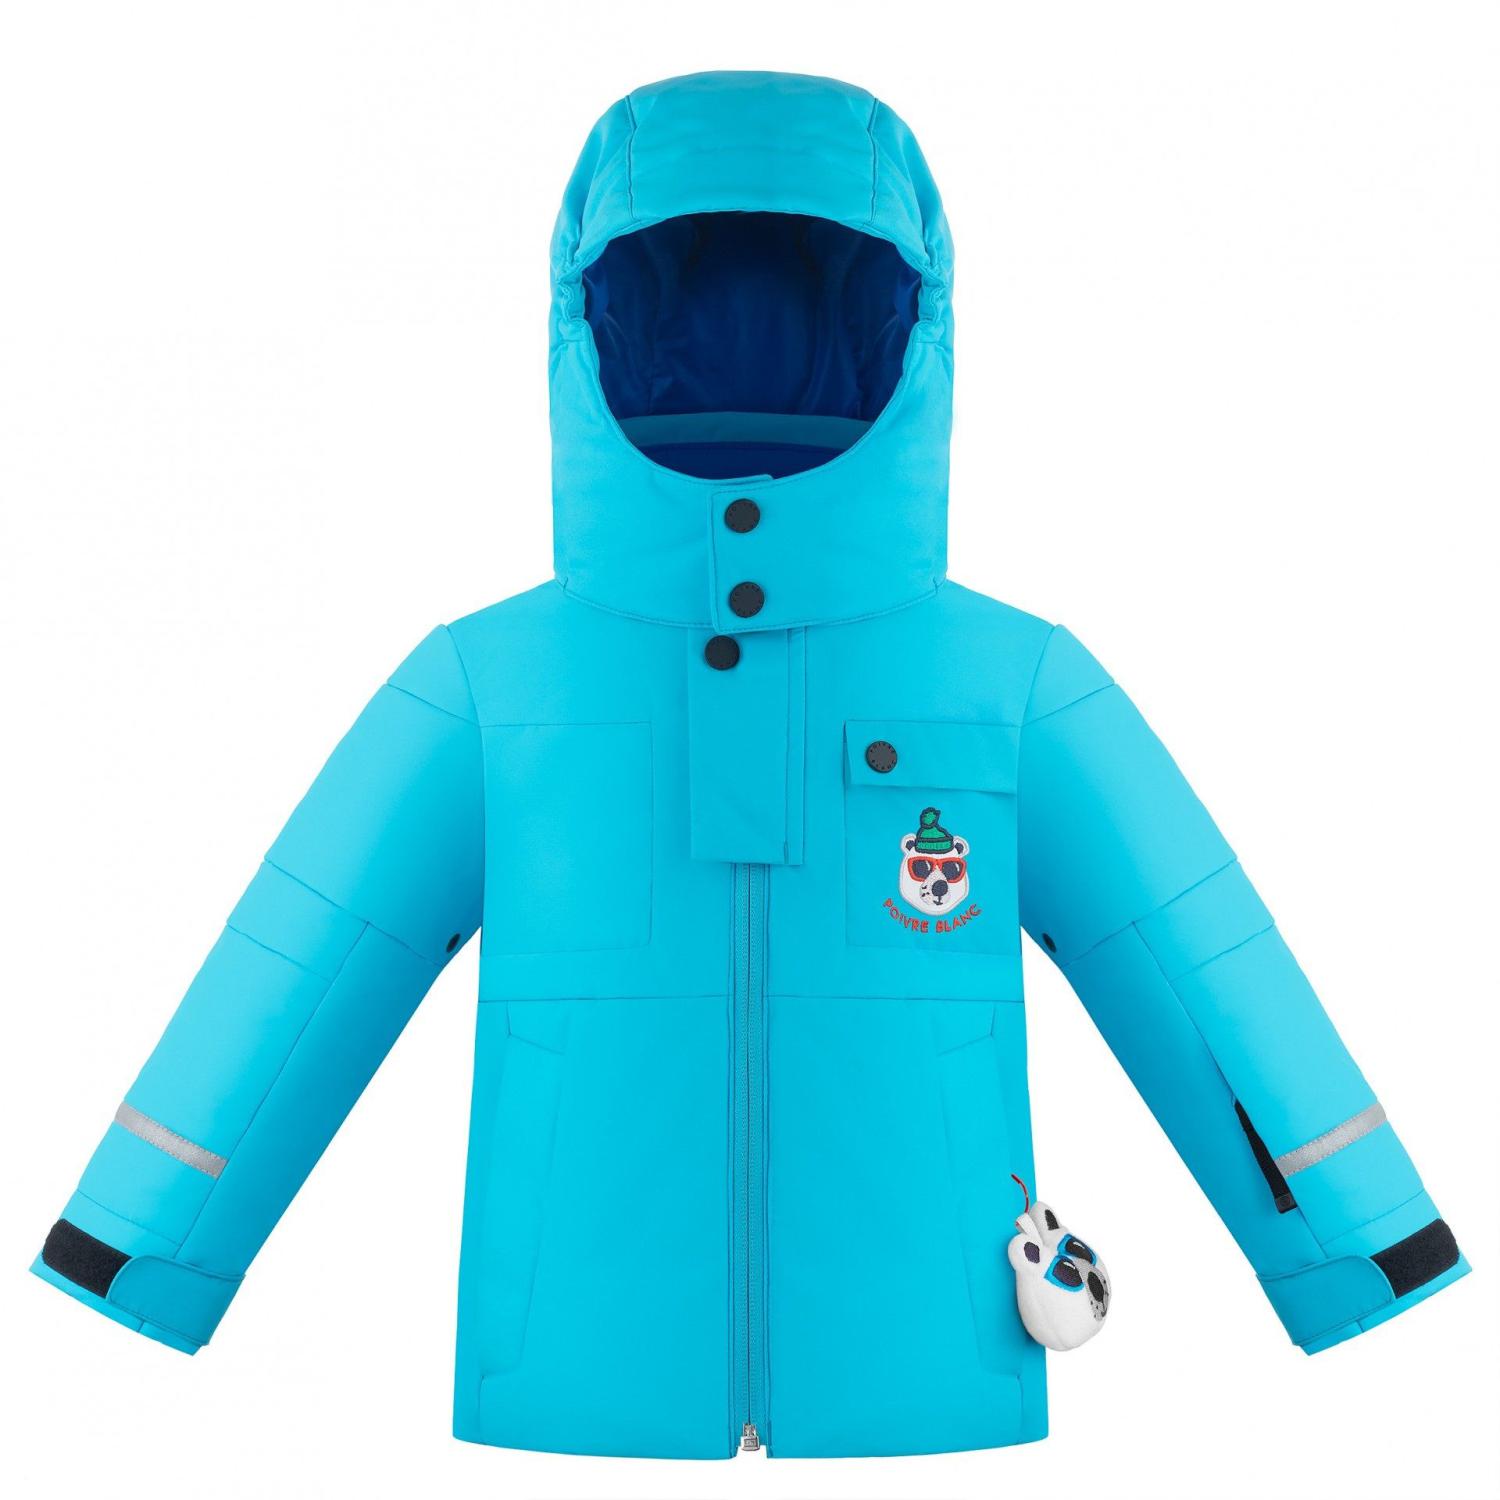 Куртка горнолыжная Poivre Blanc 19-20 Ski Jacket Aqua Blue куртка горнолыжная head 20 21 rebels sun jacket w whan